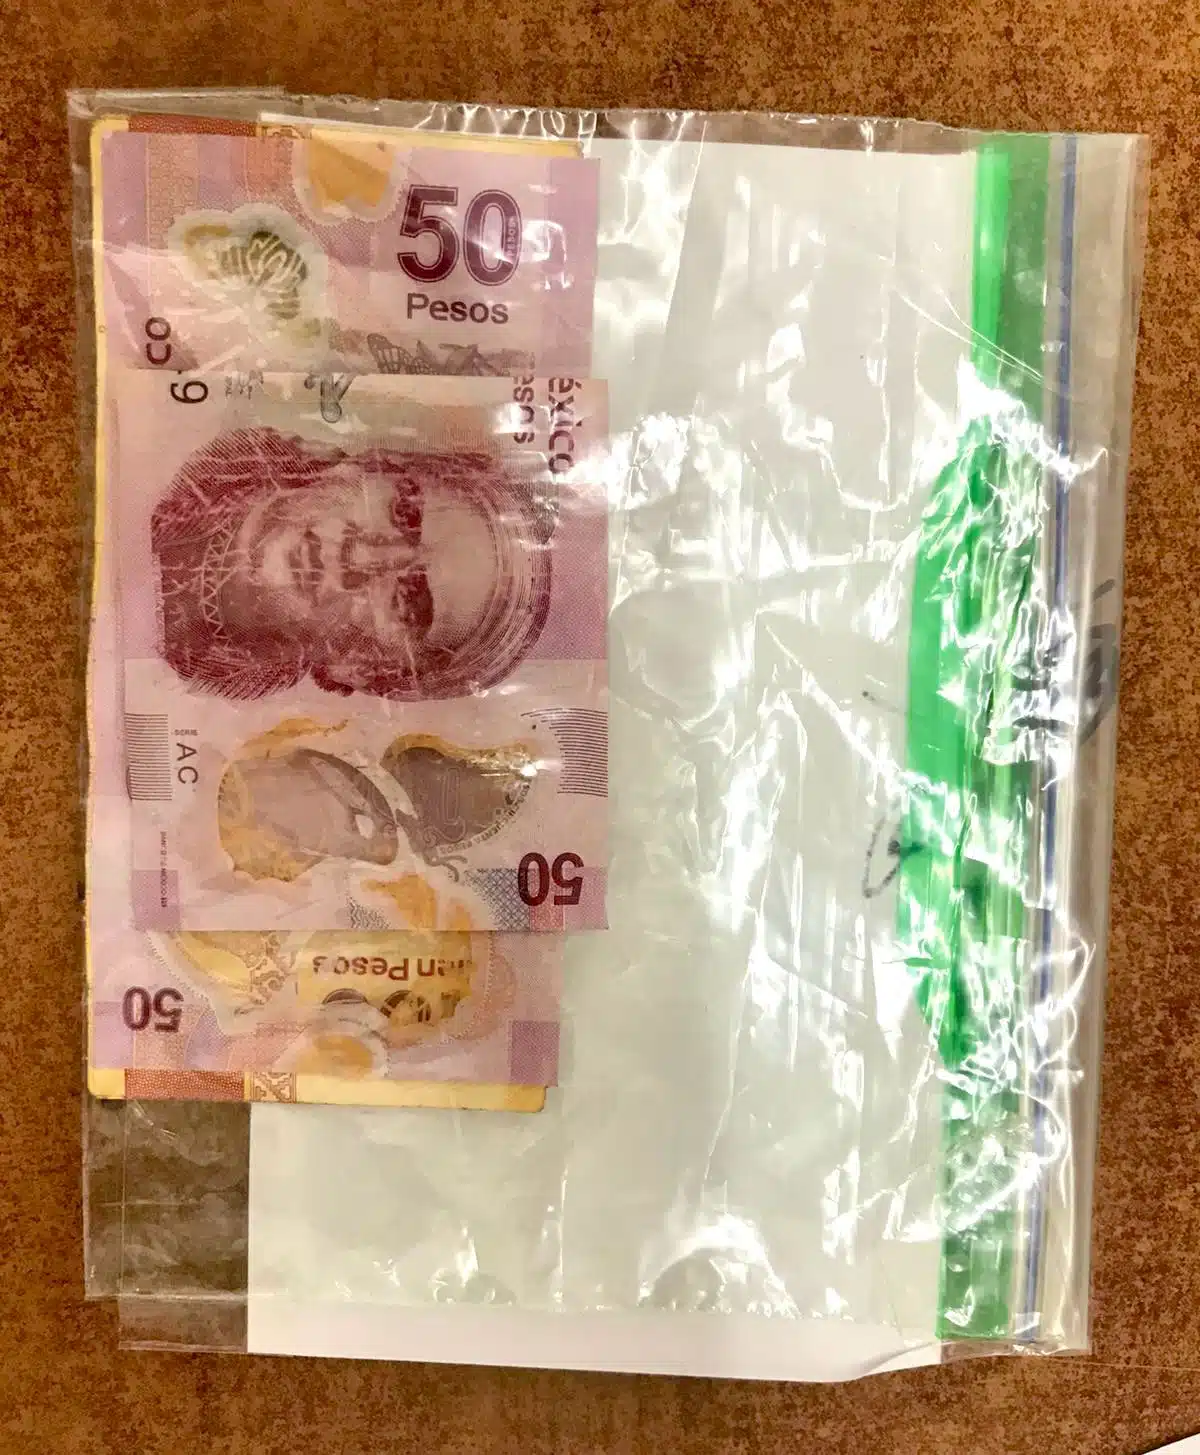 Dinero asegurado por policías tras ser robado a empleada de farmacia en Culiacán